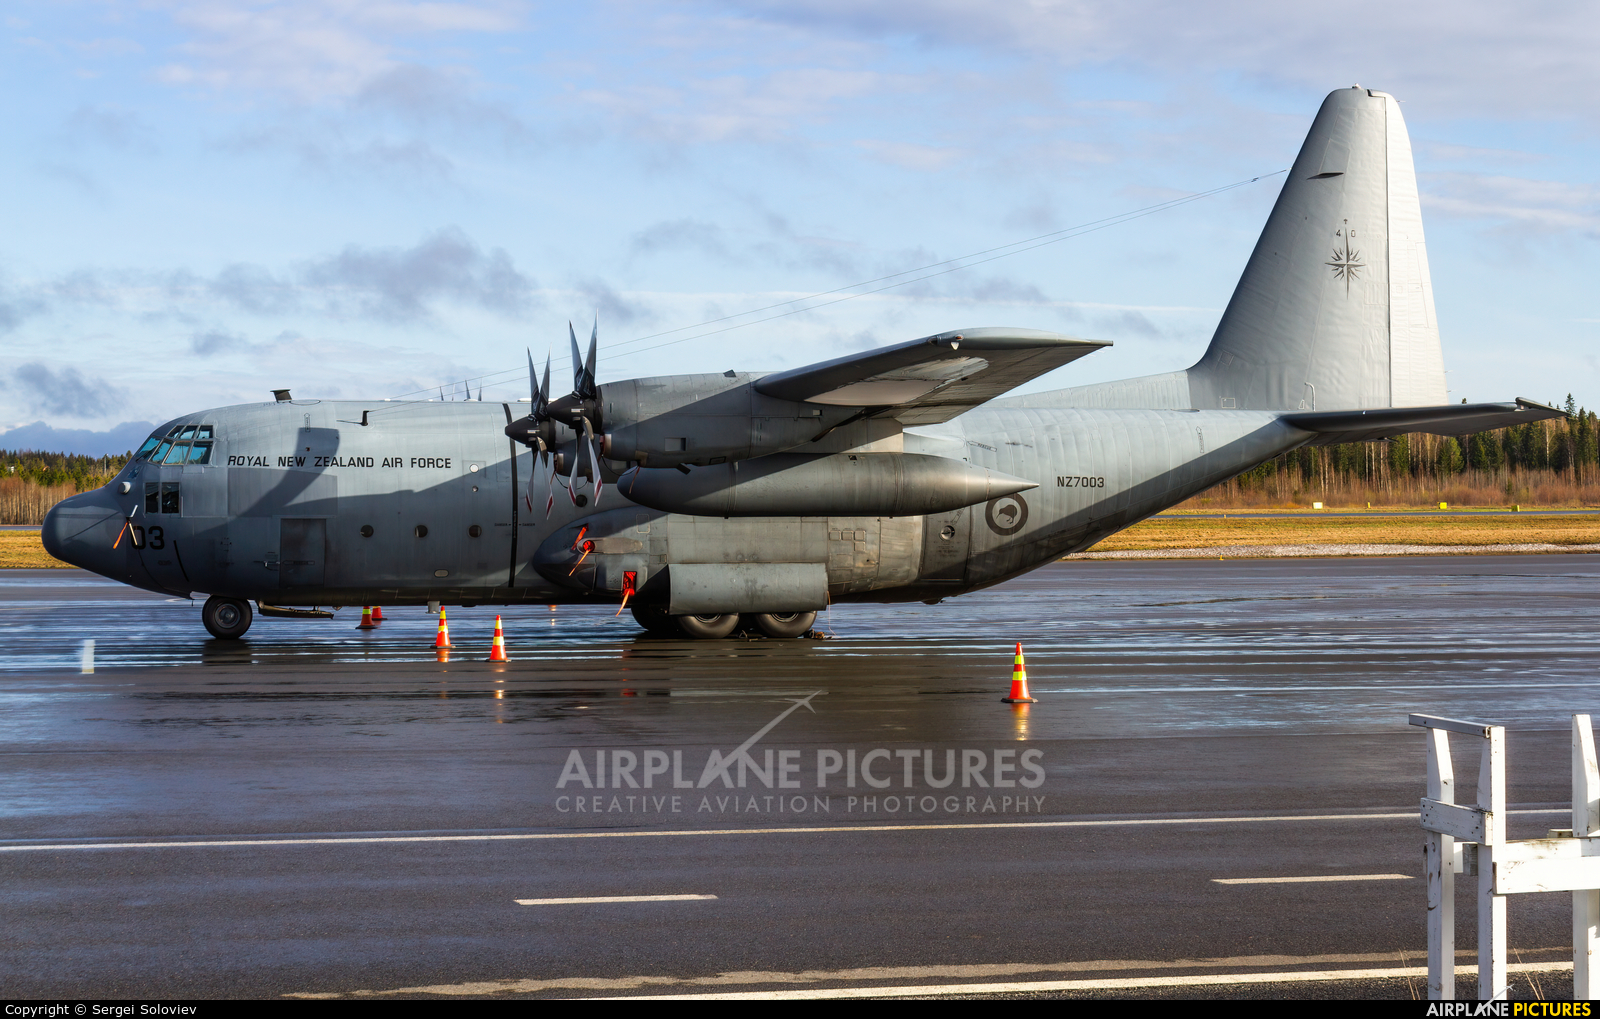 New Zealand - Air Force NZ7003 aircraft at Tampere-Pirkkala